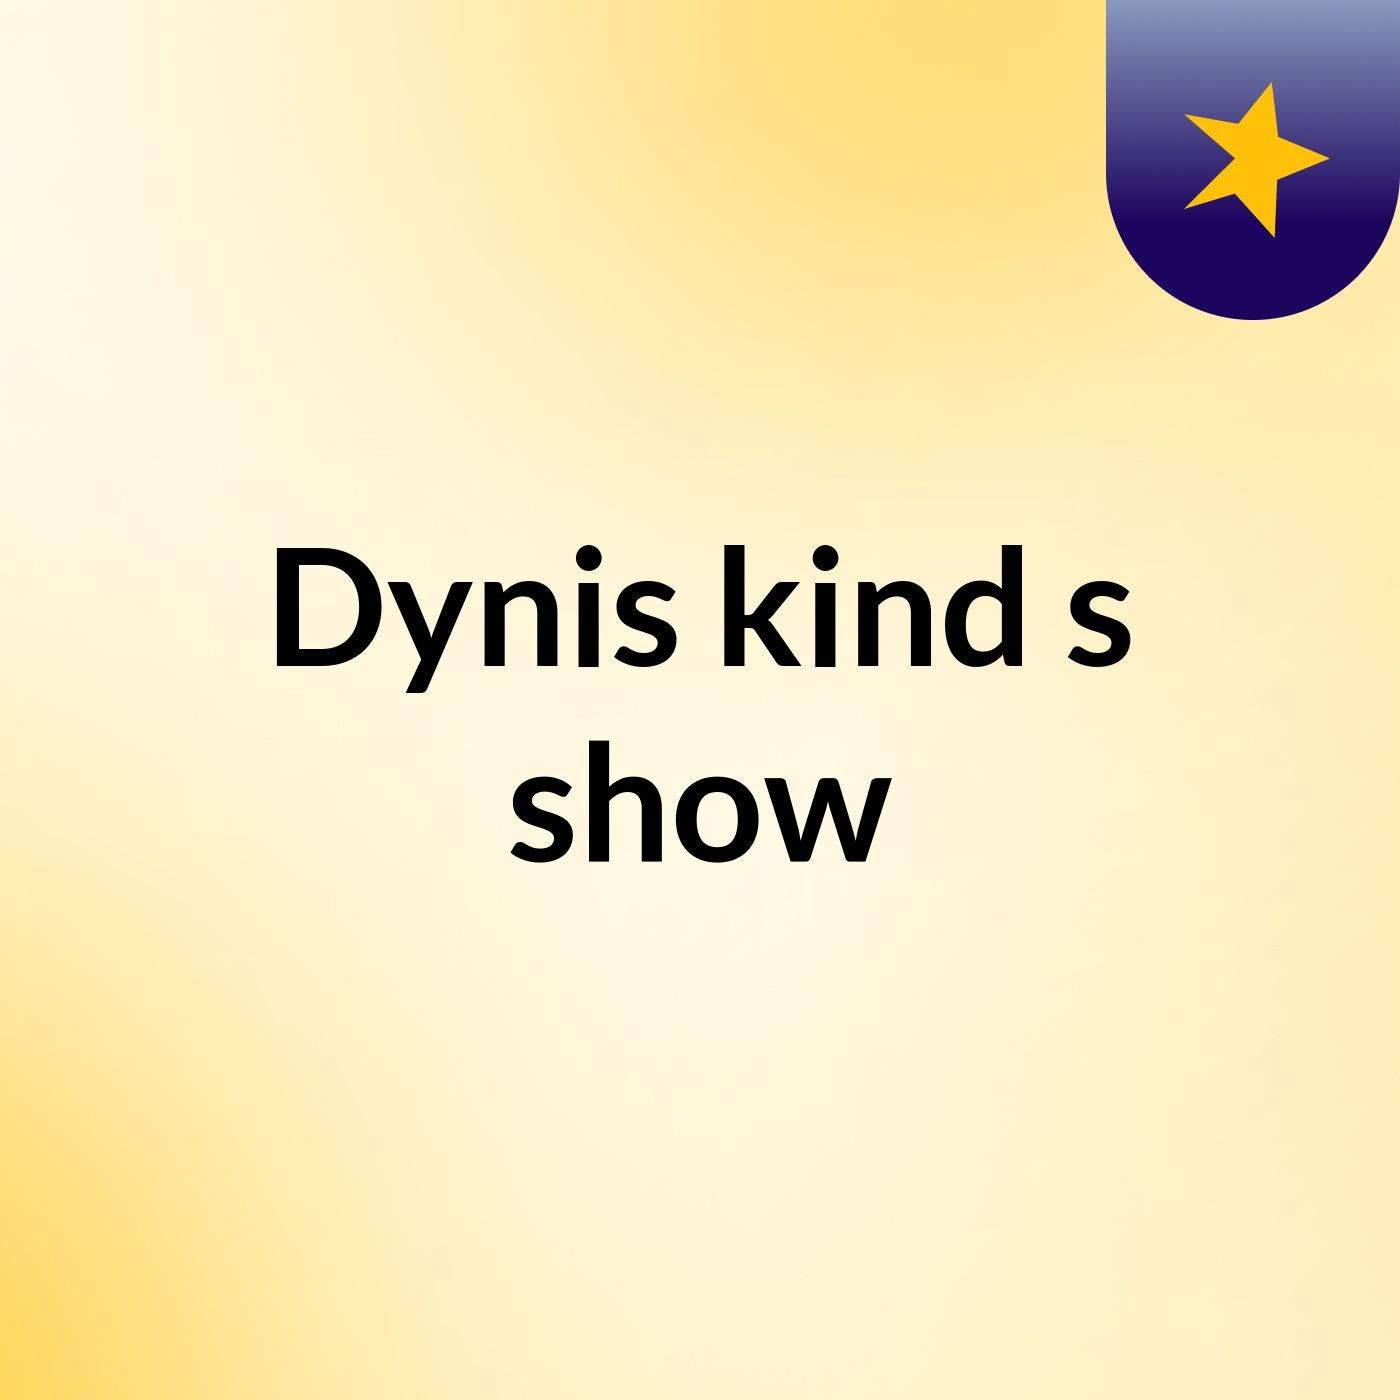 Episode 2 - Dynis kind's show